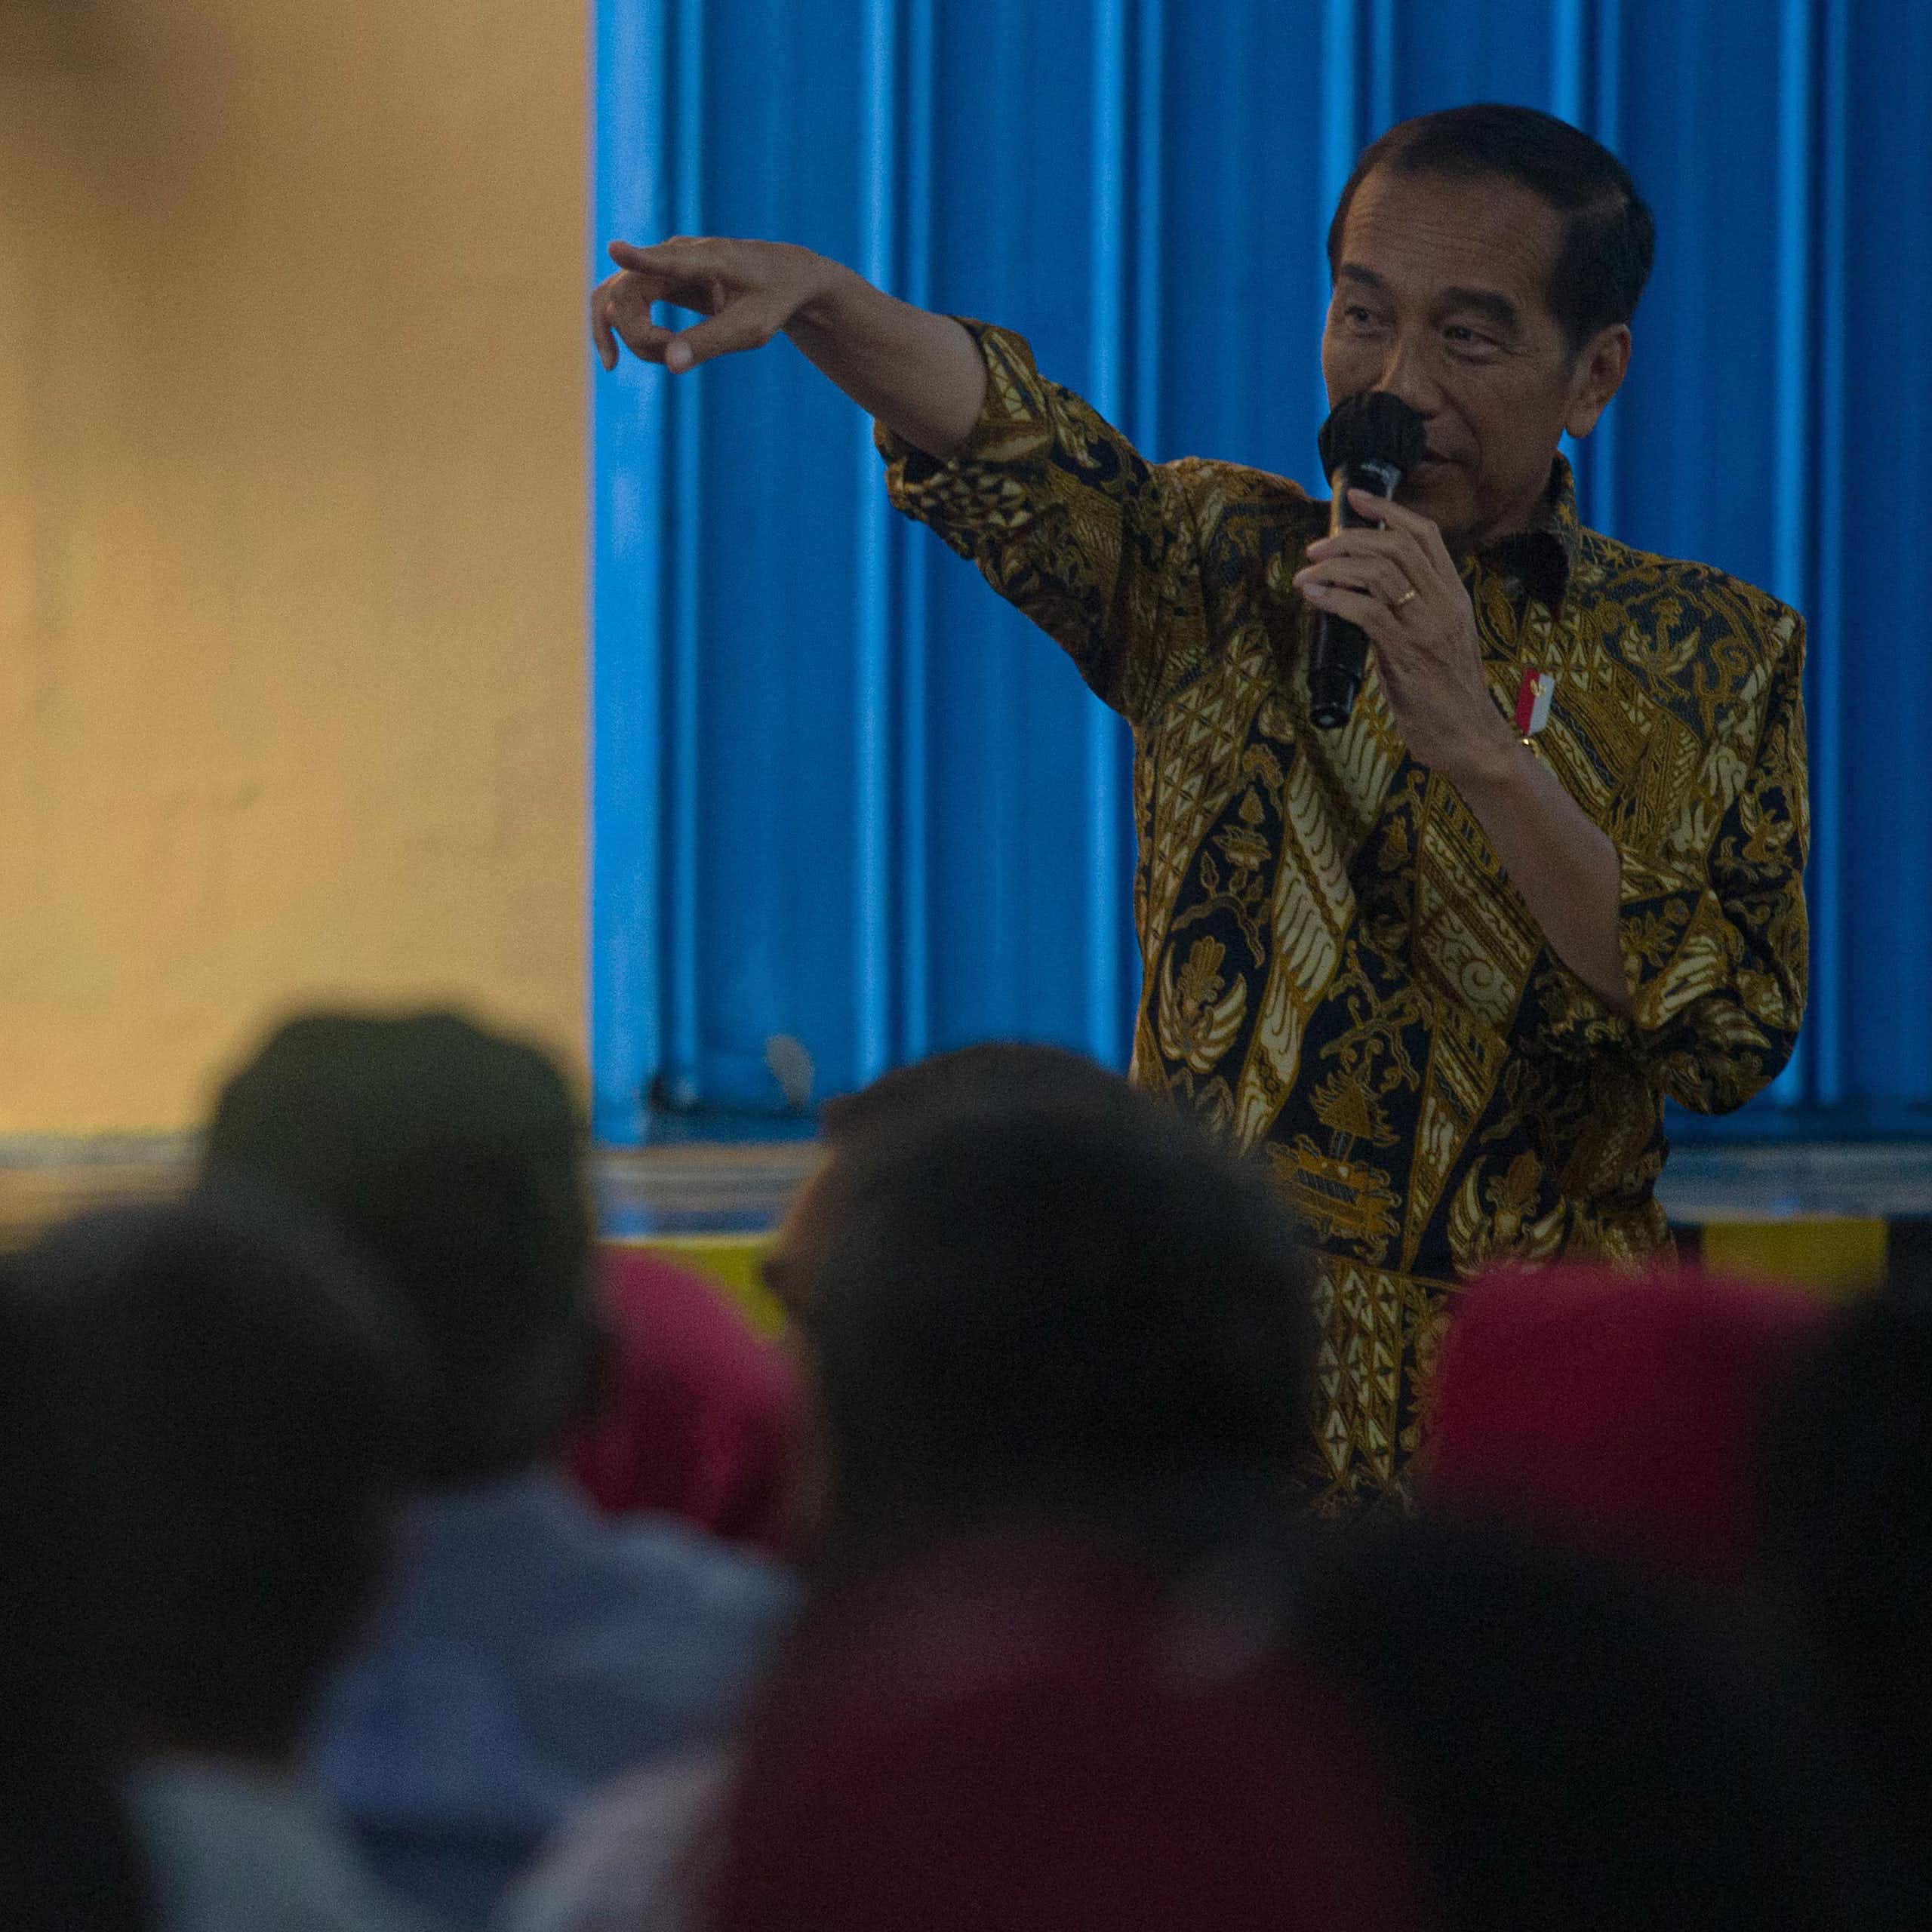 Jelang akhir kekuasaan Jokowi: 2 warisan kontroversial yang memengaruhi lanskap politik Indonesia